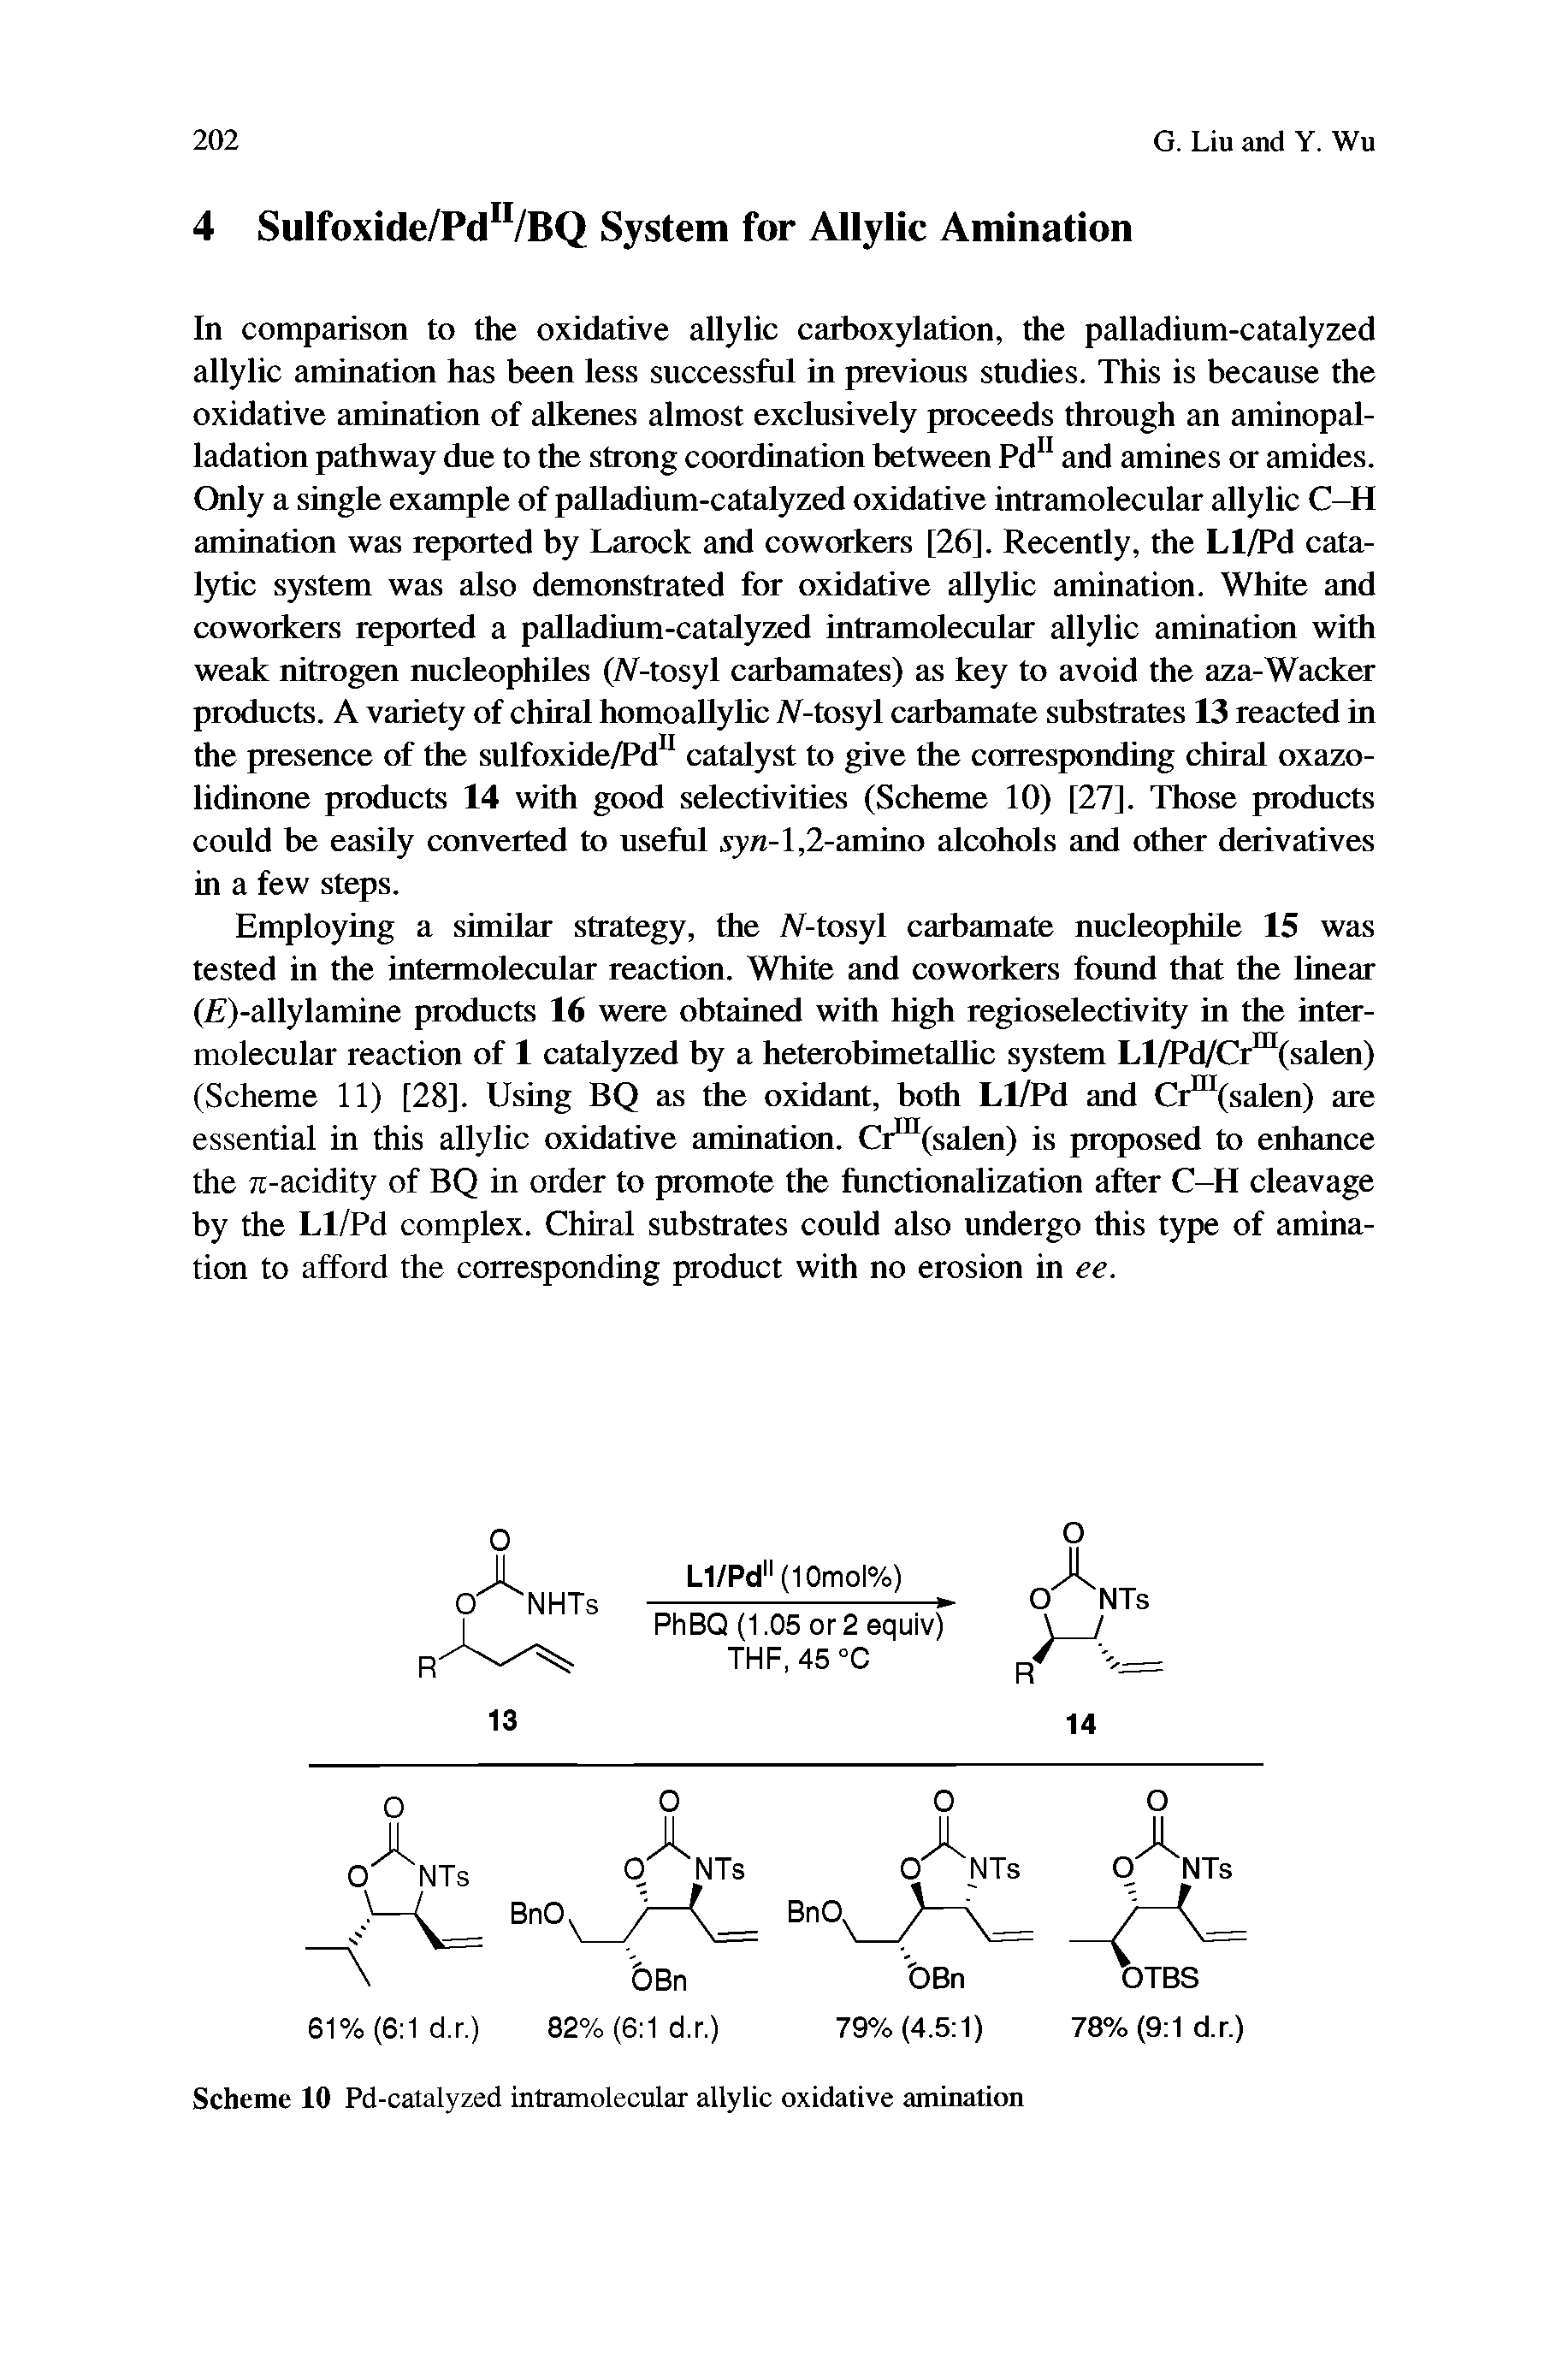 Scheme 10 Pd-catalyzed intramolecular allylic oxidative amination...